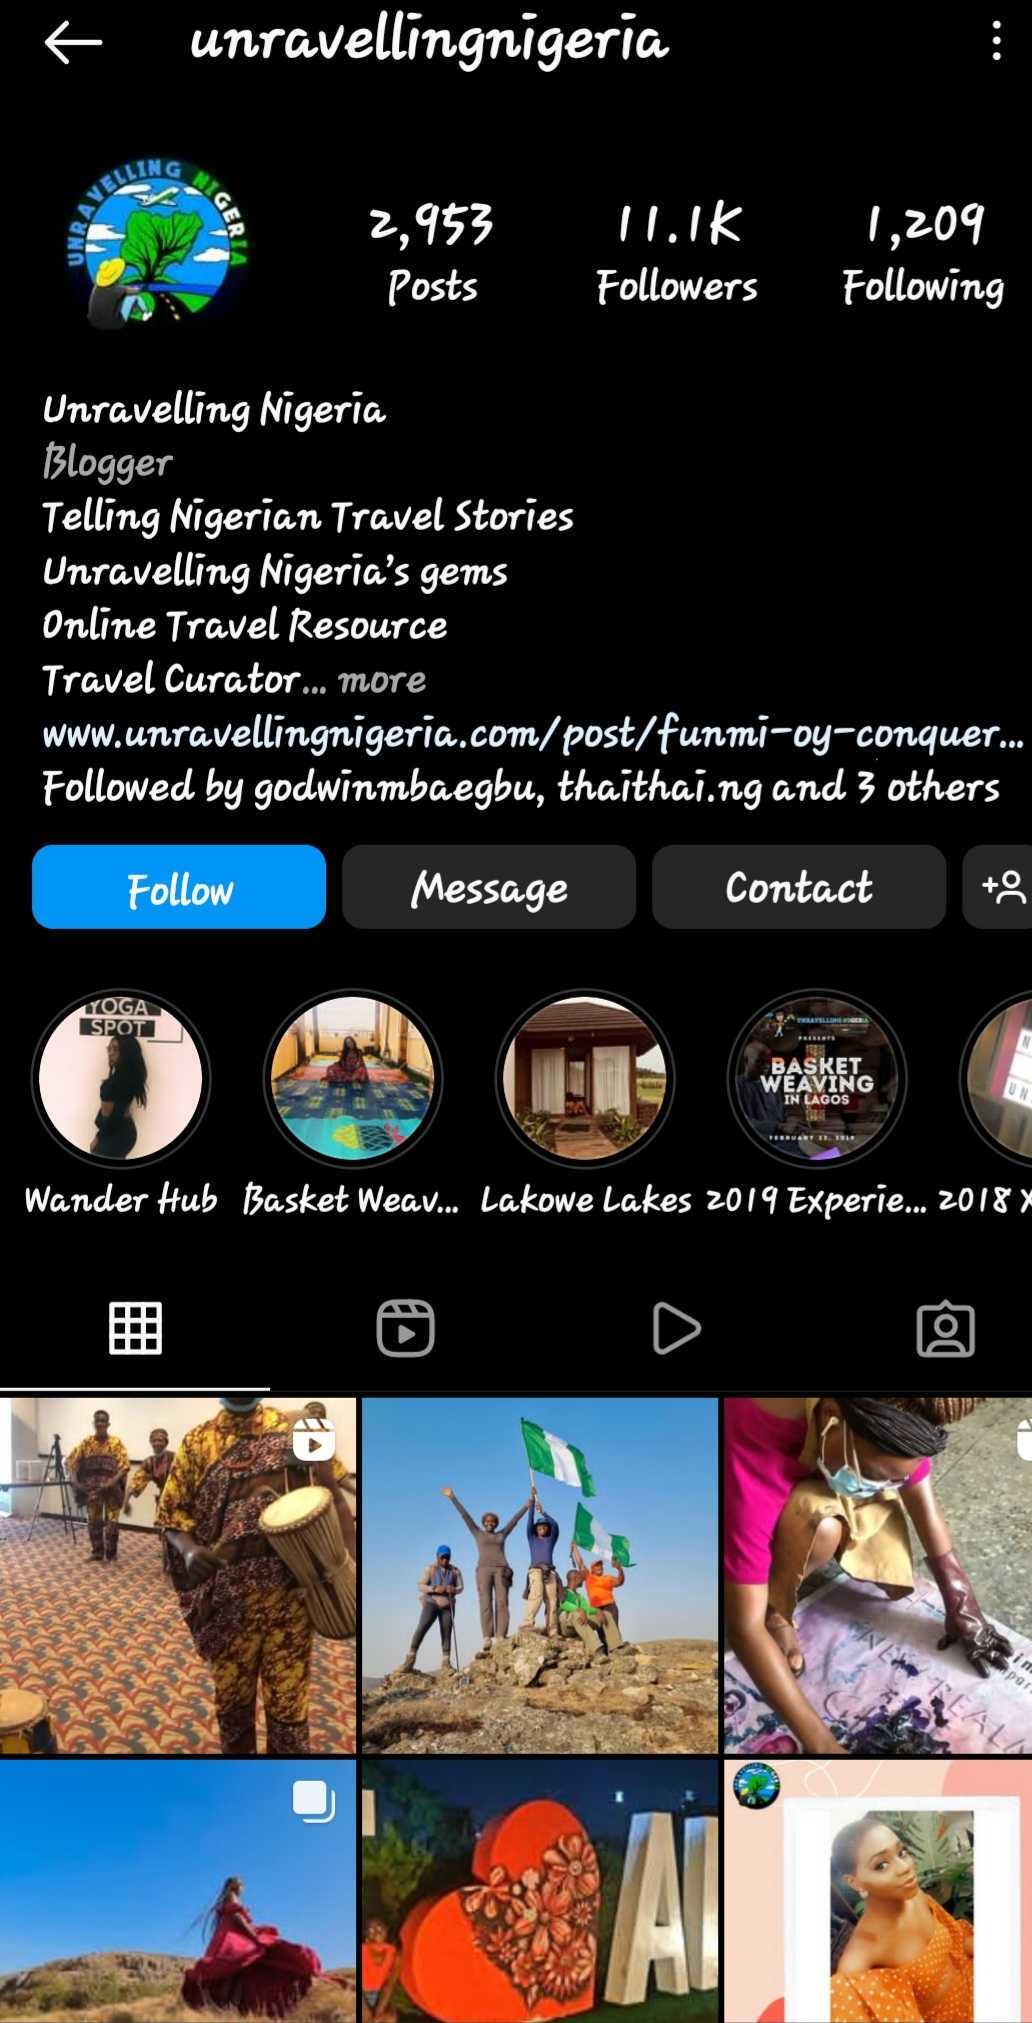 Unravelling Nigeria - Travel Vlogger
